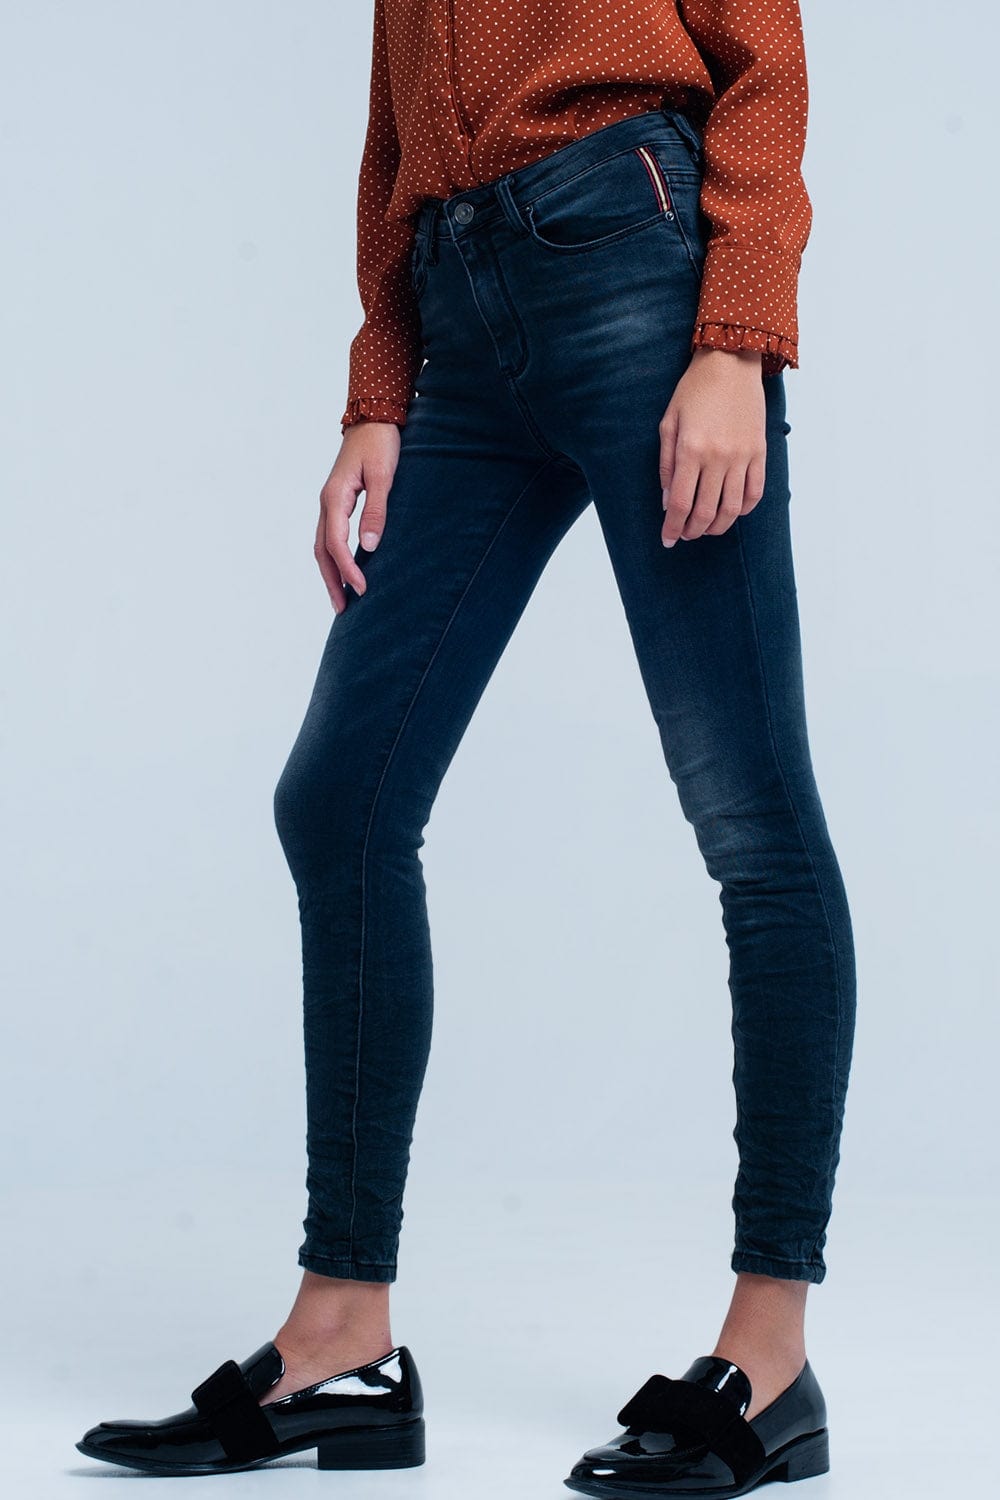 Q2 Women's Jean Black wrinkled skinny high-waisted jeans